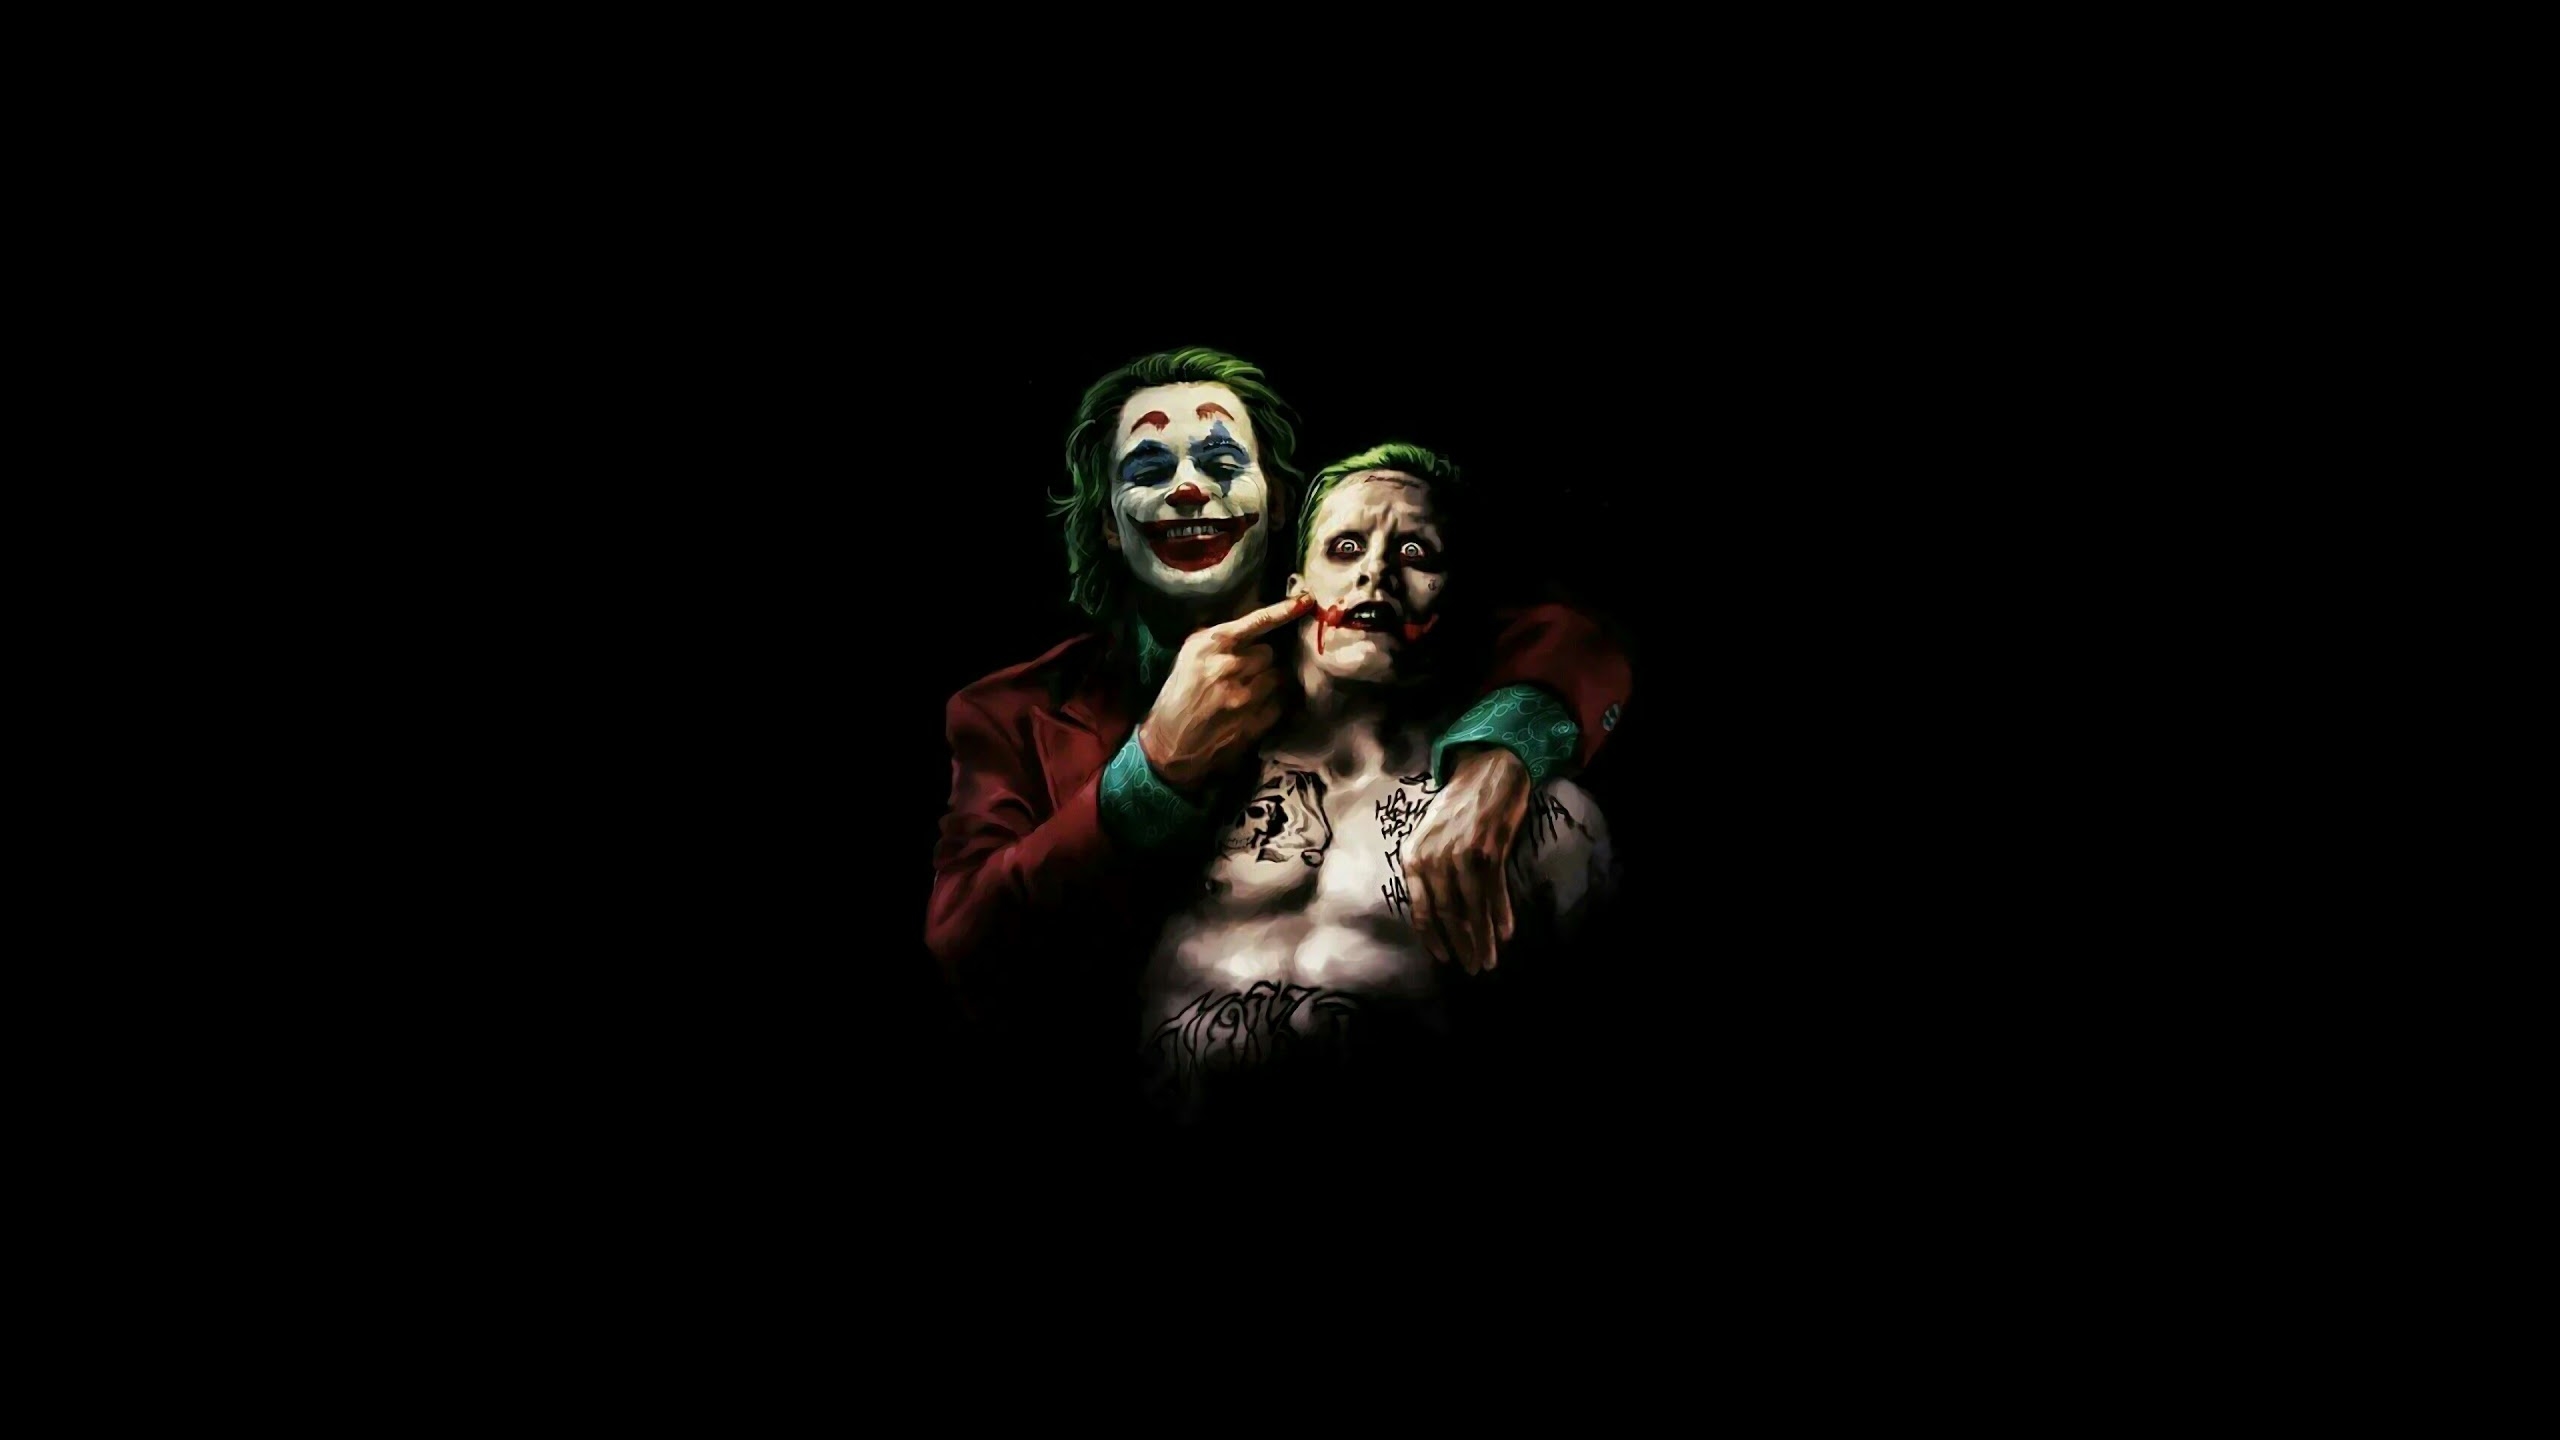 Joker x Joker Wallpaper, HD Superheroes 4K Wallpapers, Images, Photos and  Background - Wallpapers Den